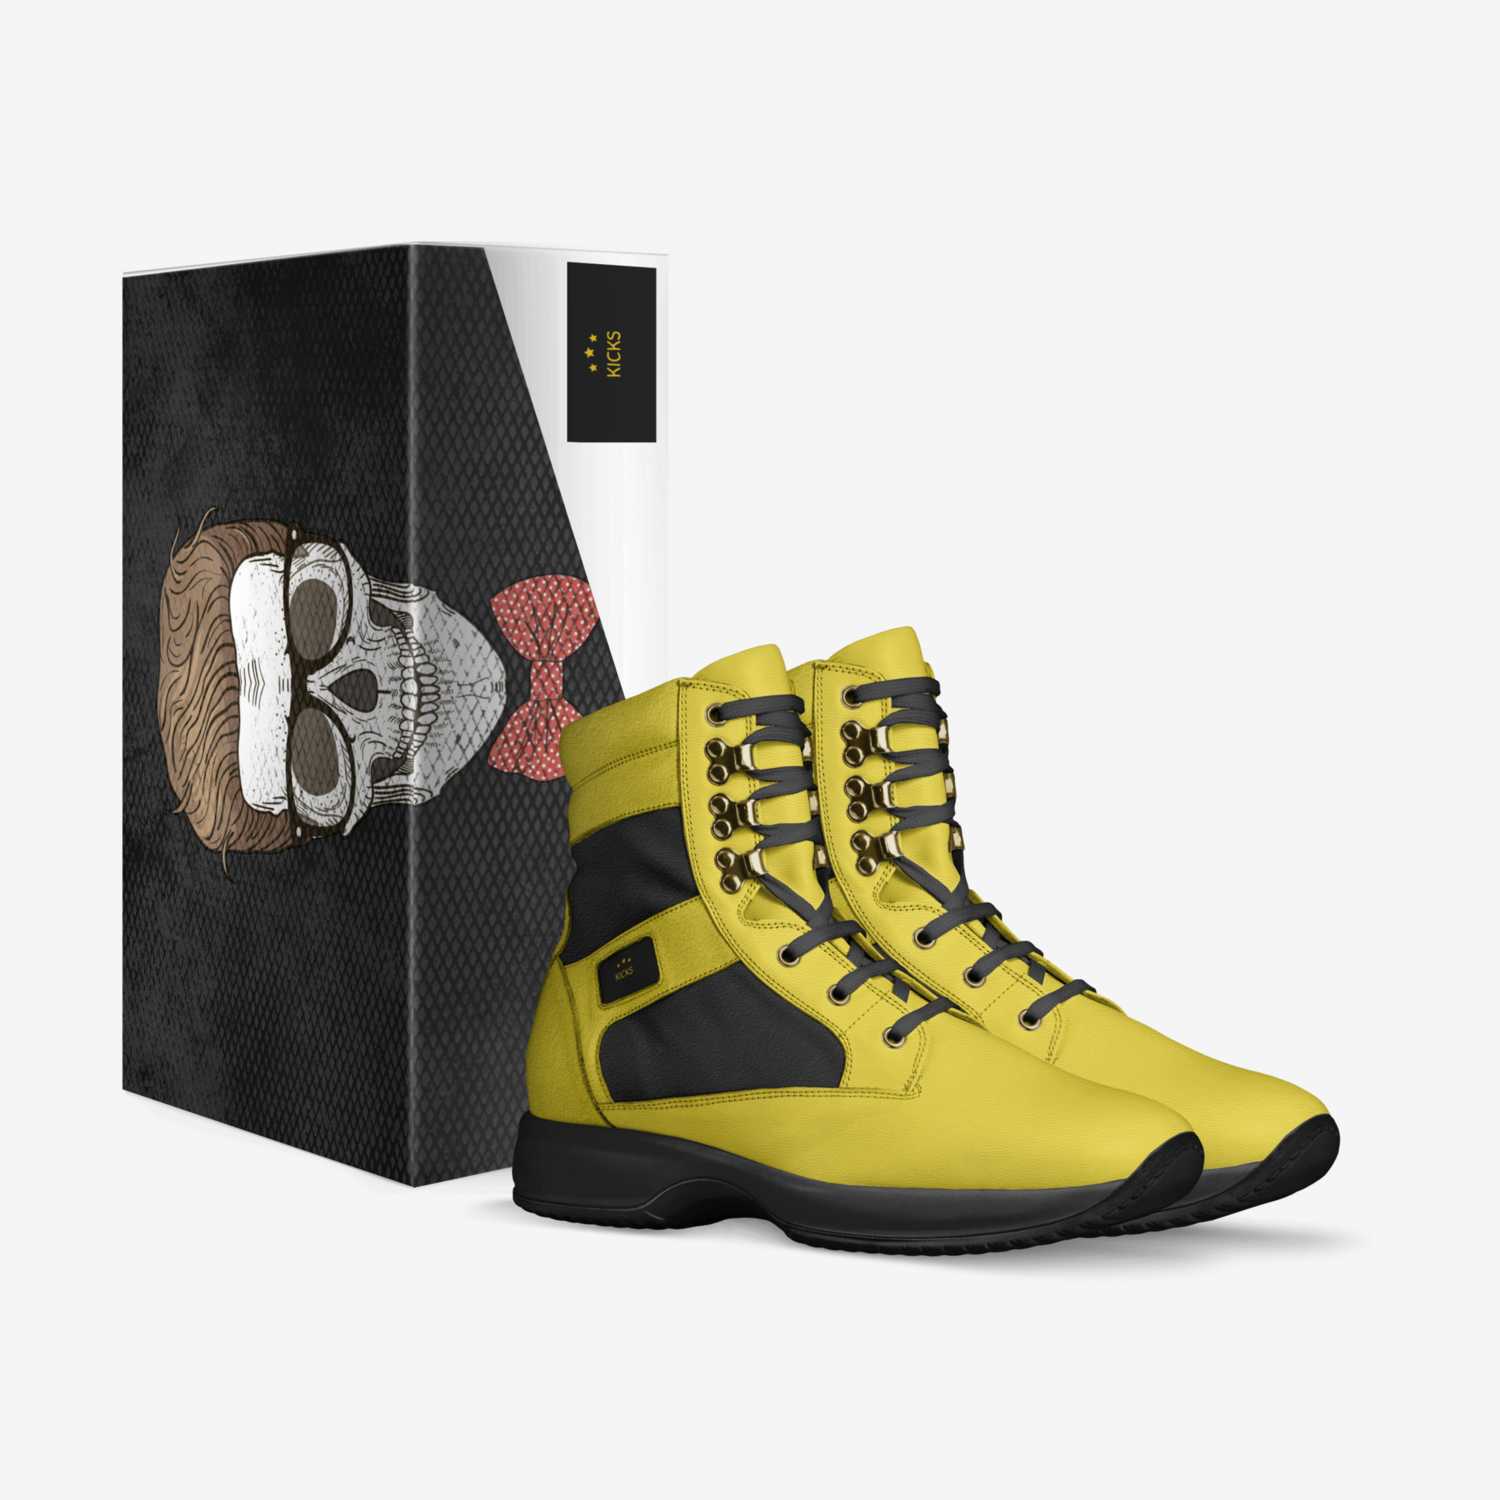 Kicks custom made in Italy shoes by Rudy Ramone Keys | Box view